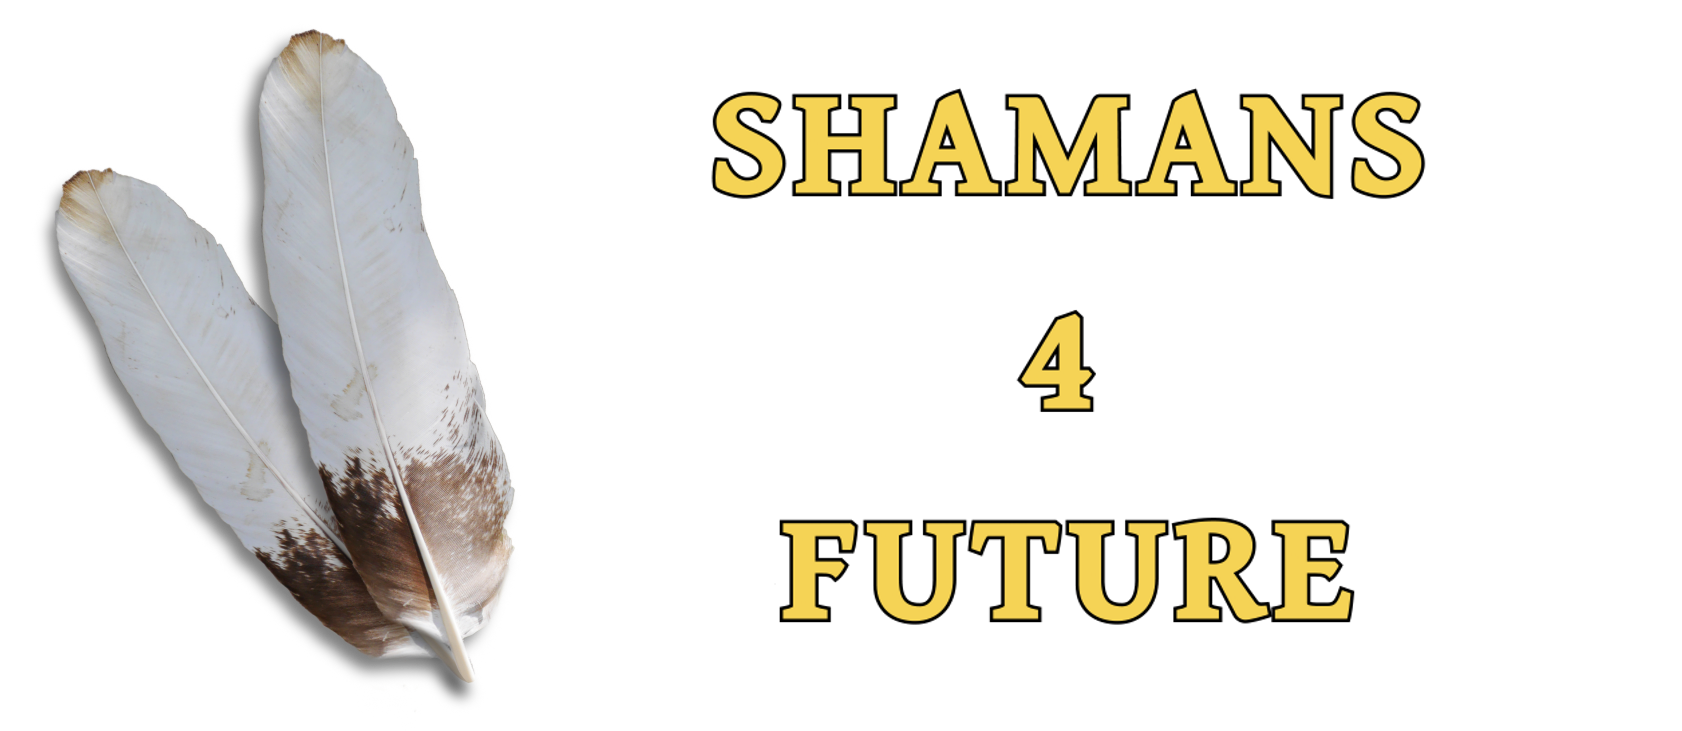 Shamans4future